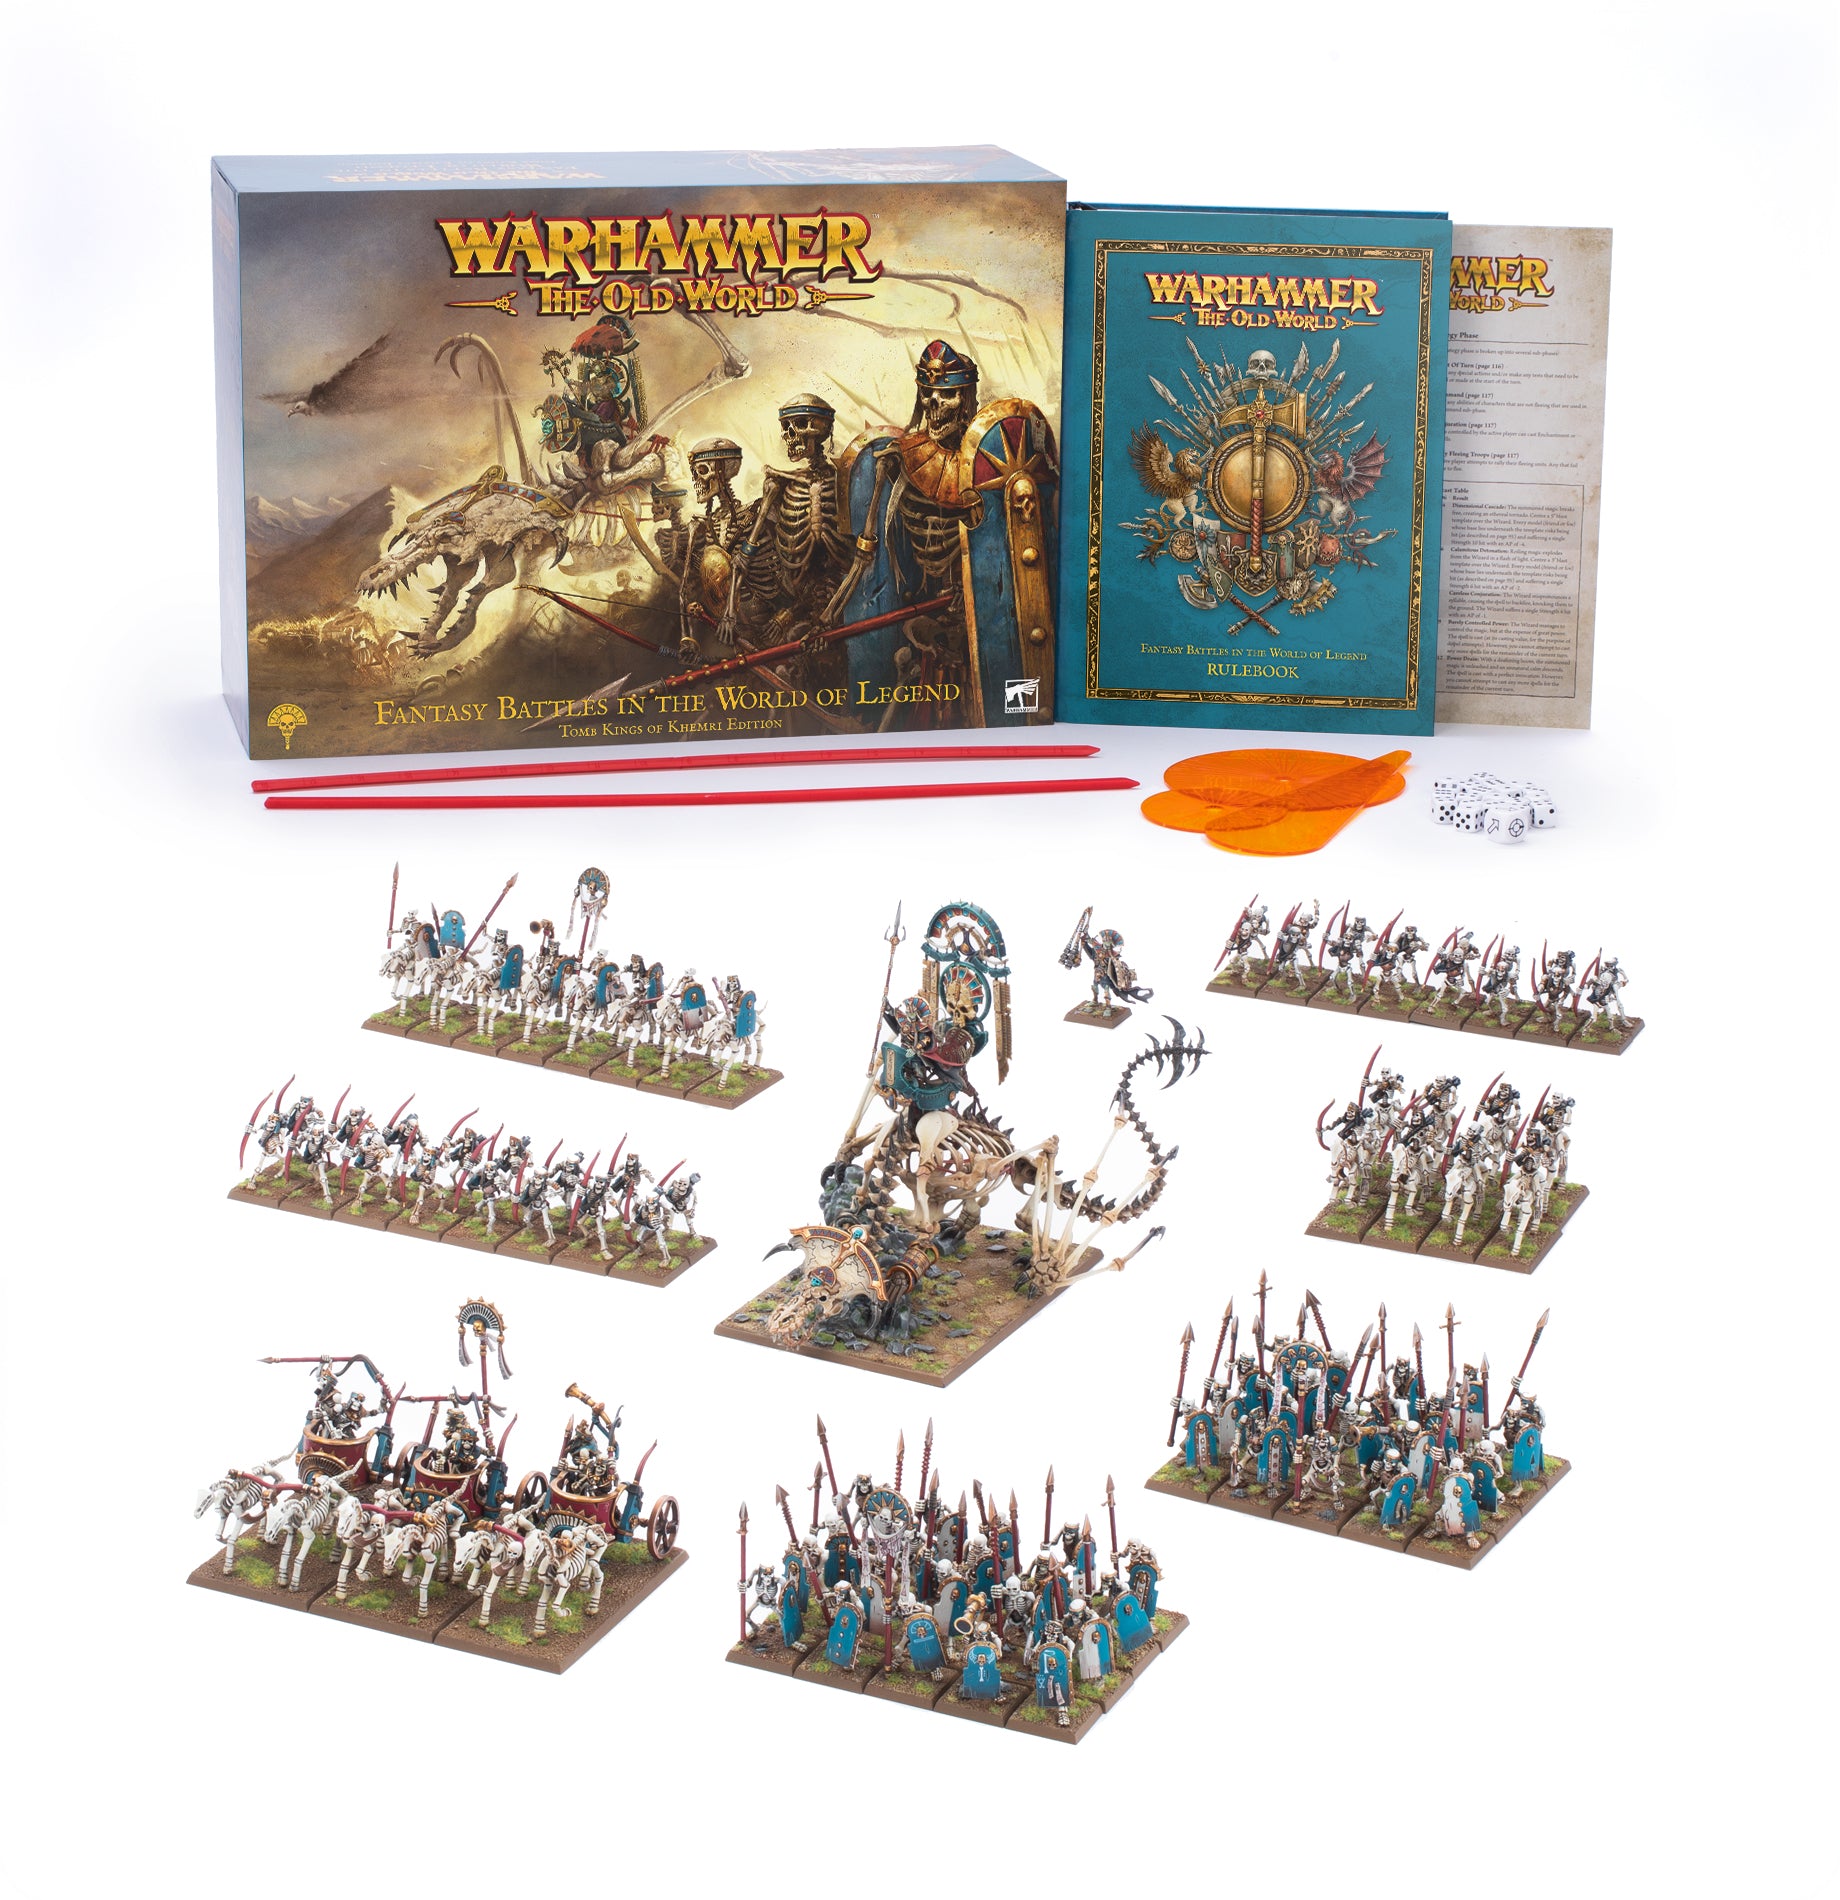 Warhammer: The Old World Core Set : The Tomb Kings of Khemri MK7YWP3DP1 |0|